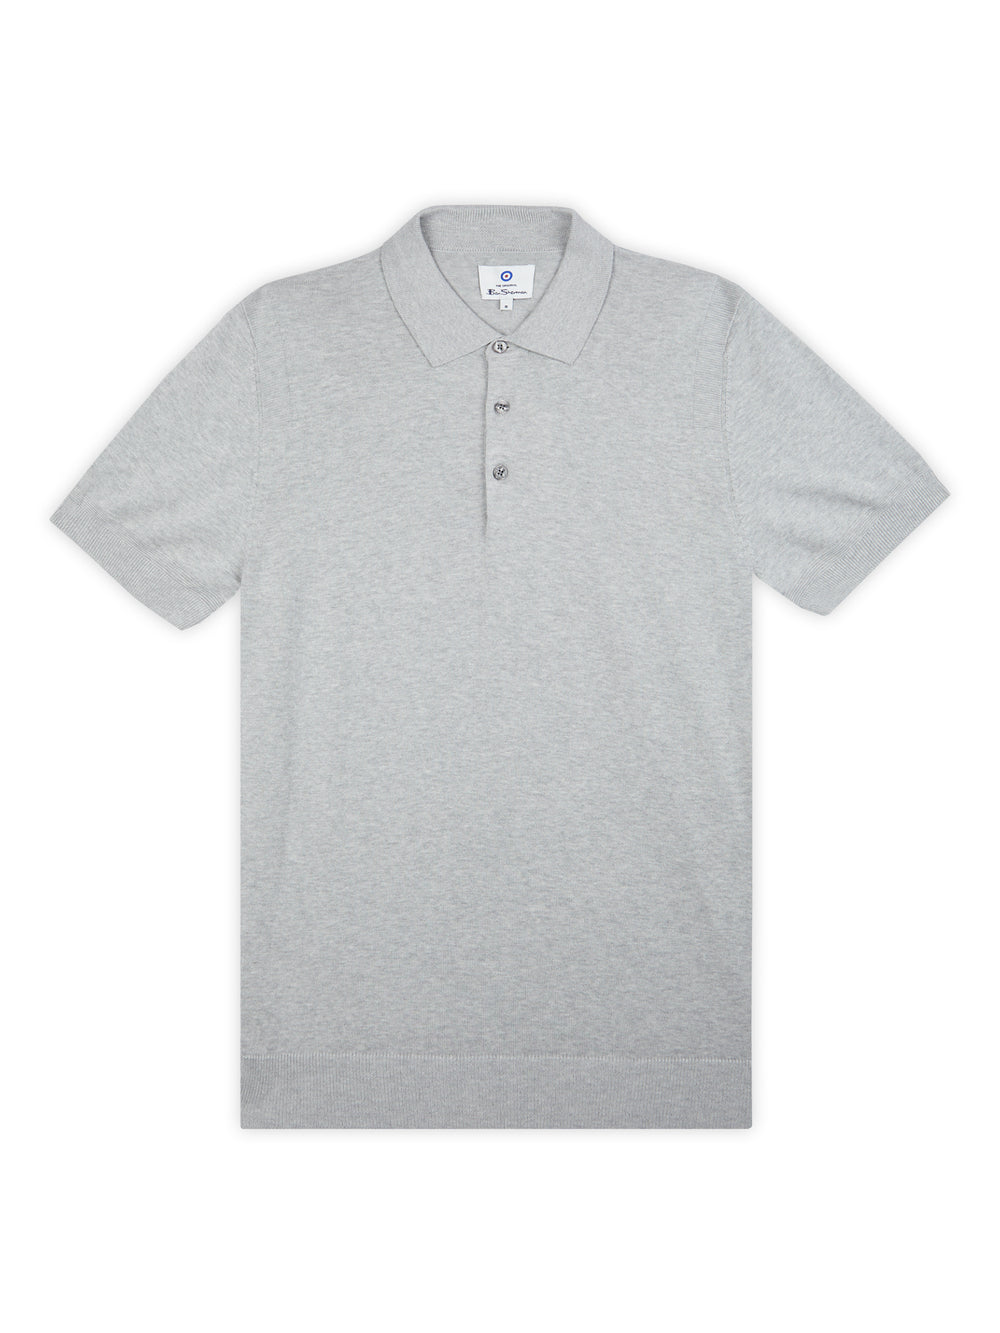 Signature Cotton Short-Sleeve Knit Polo - Grey